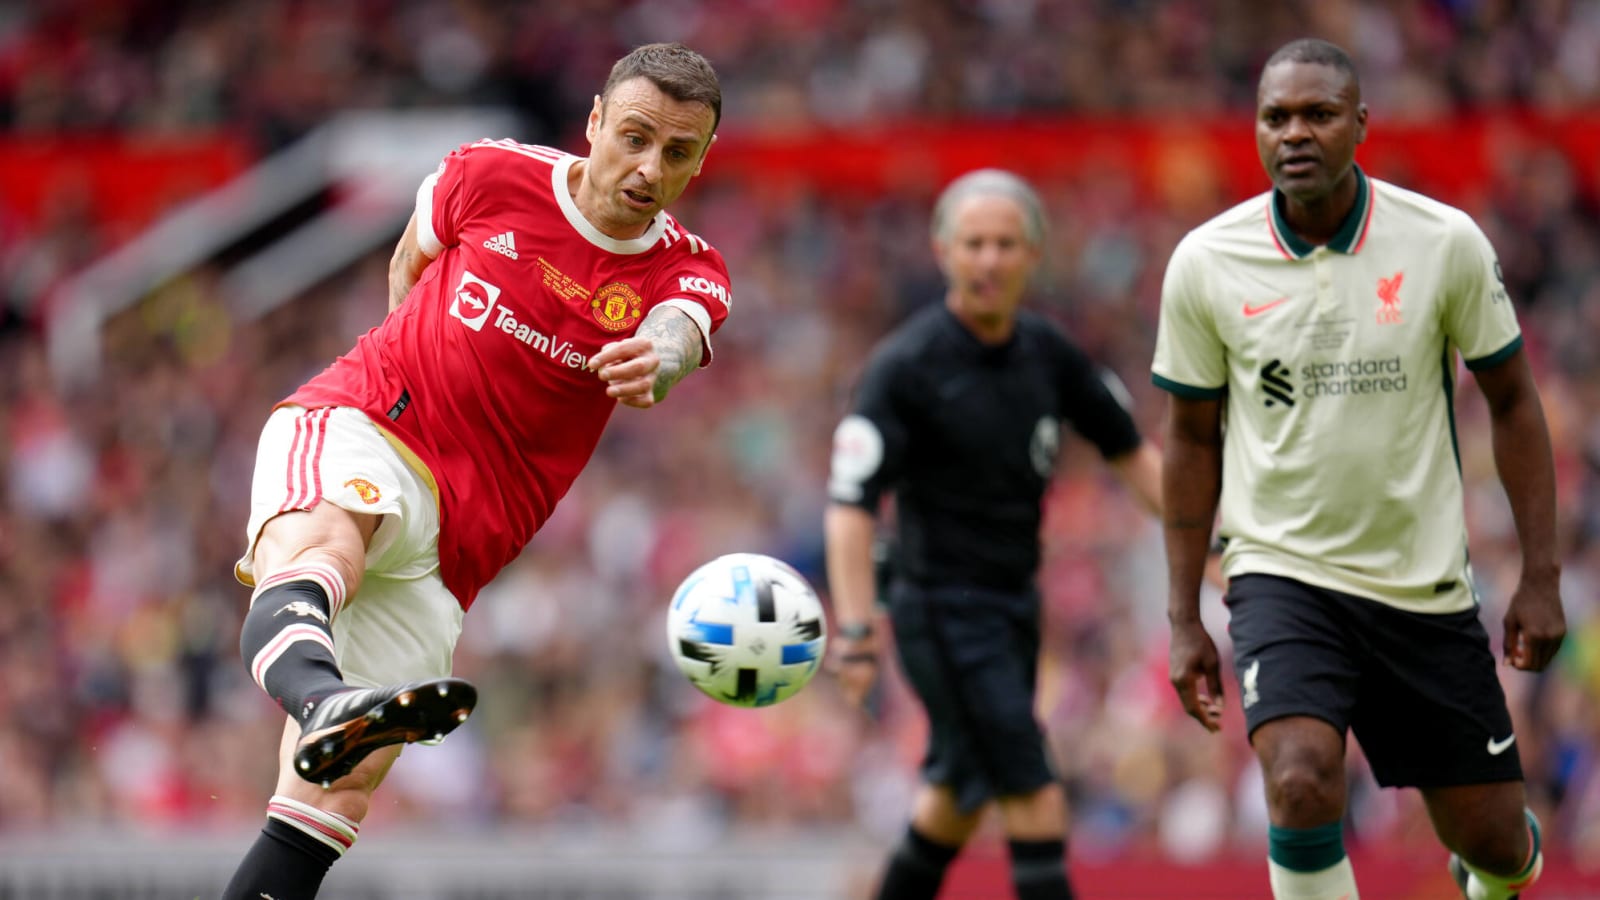 ‘Tight game’ – Dimitar Berbatov backs Manchester United to beat Tottenham